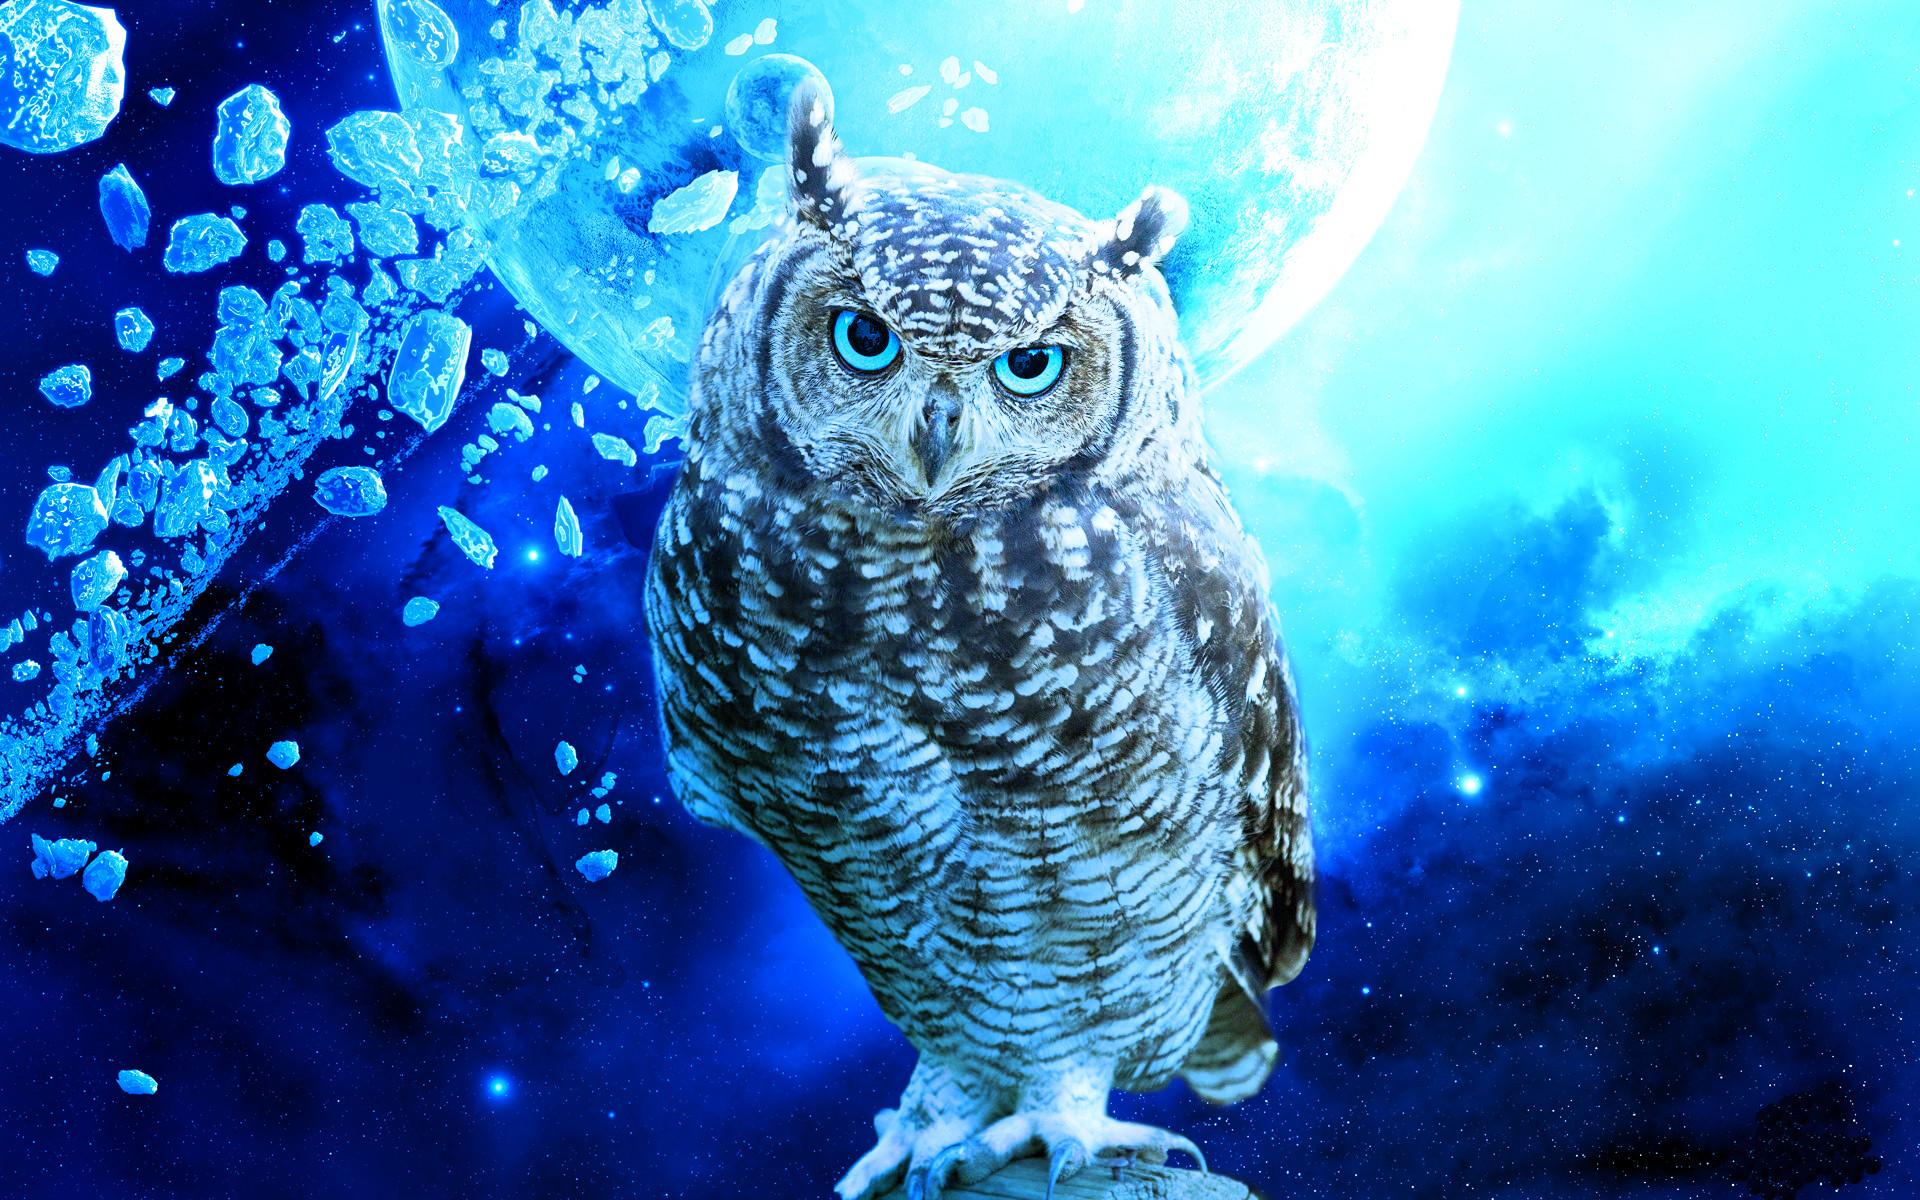 night owl 4k survellance